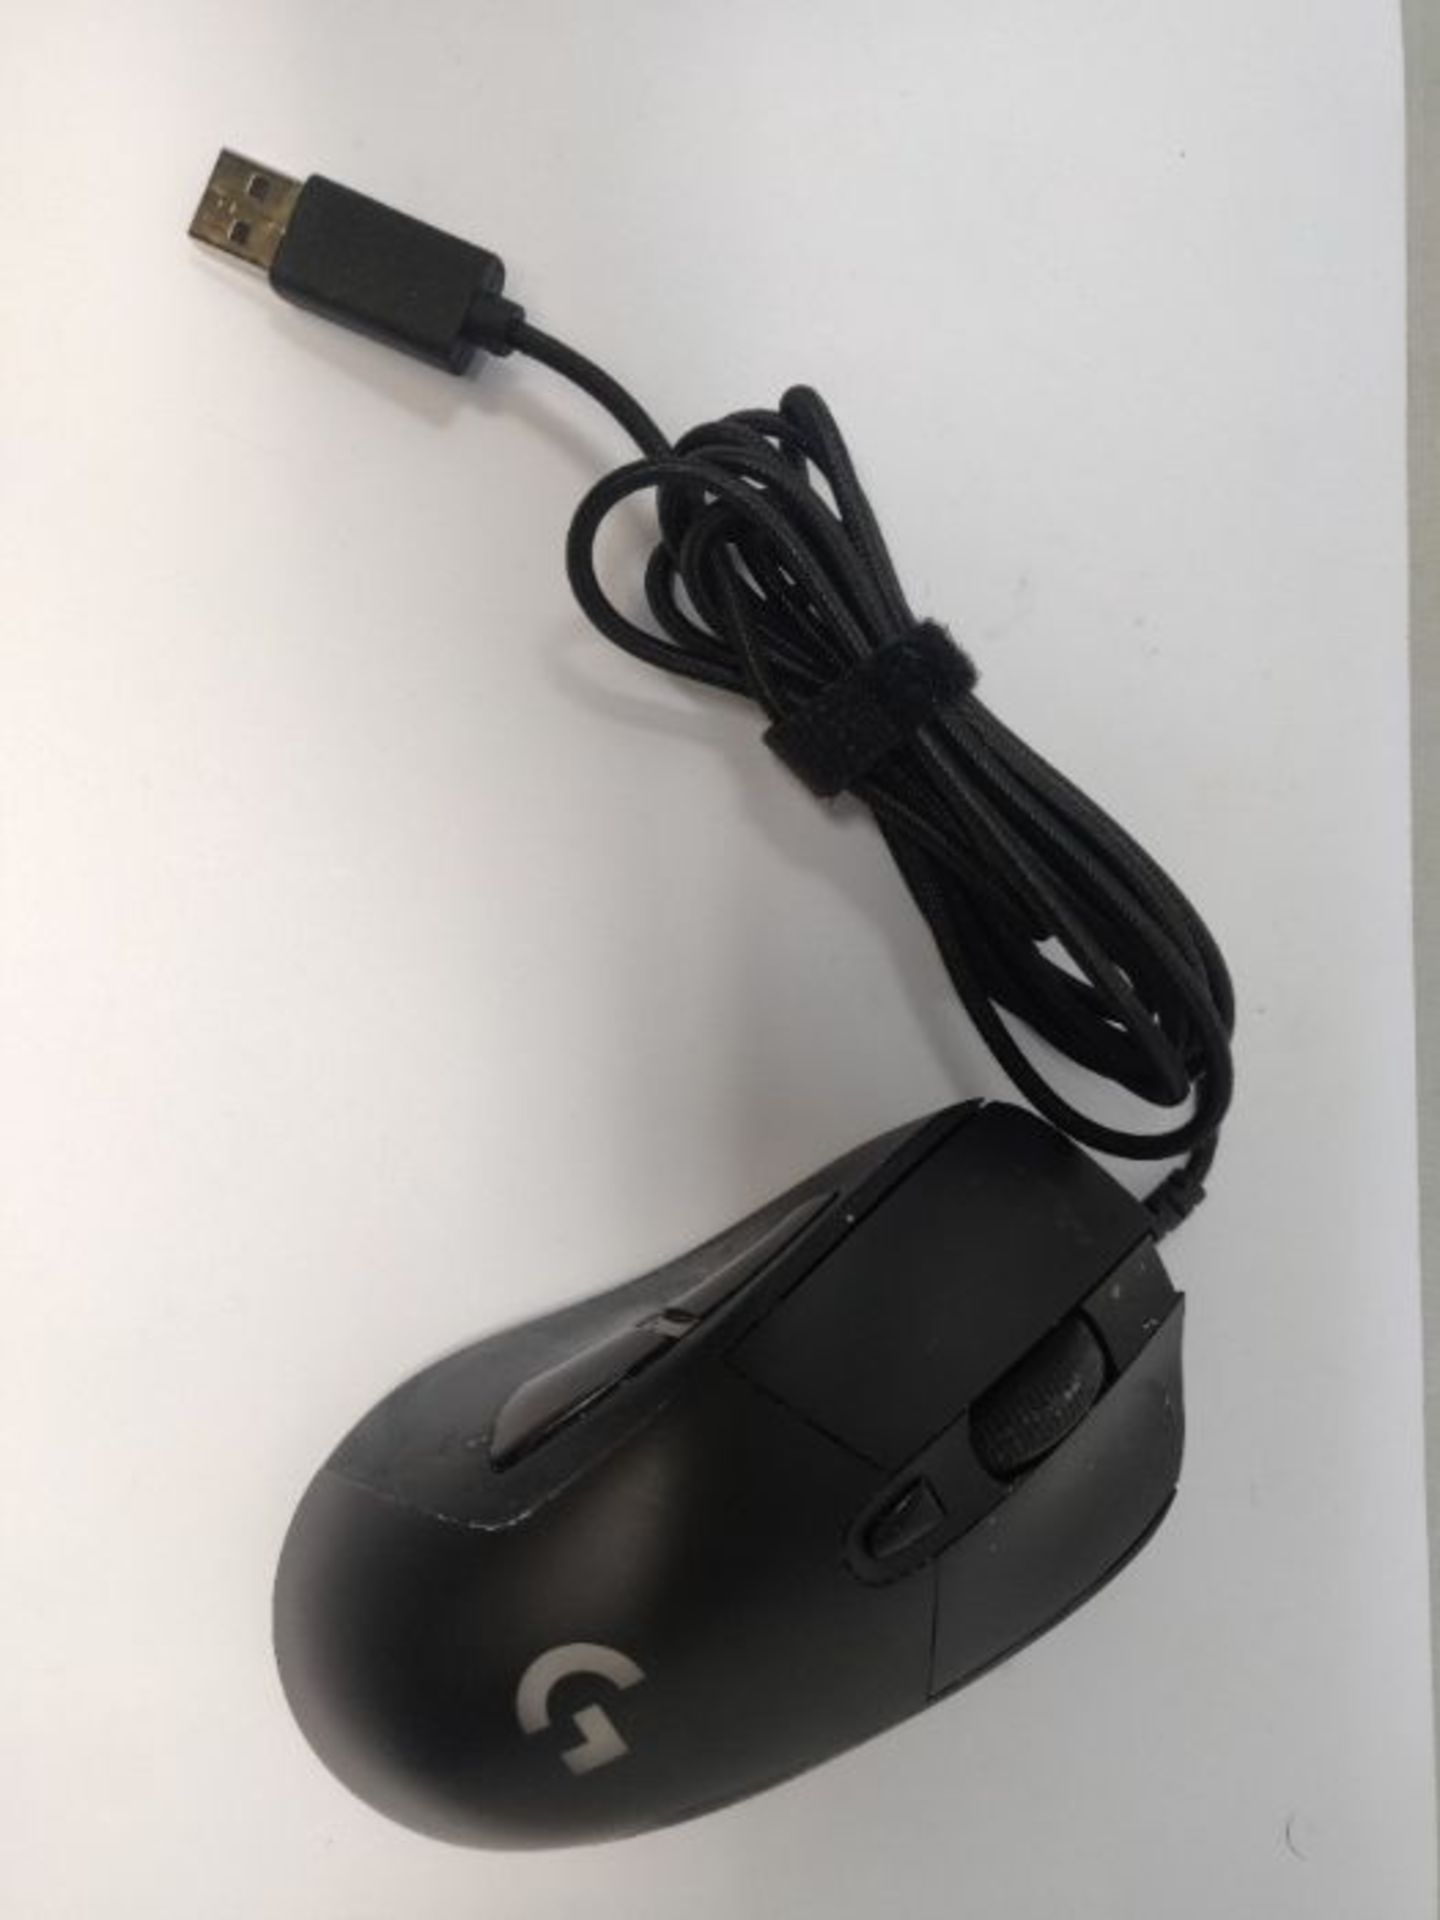 Logitech G403 HERO Wired Gaming Mouse, HERO 25K Sensor, 25,600 DPI, RGB Backlit Keys, - Image 3 of 3